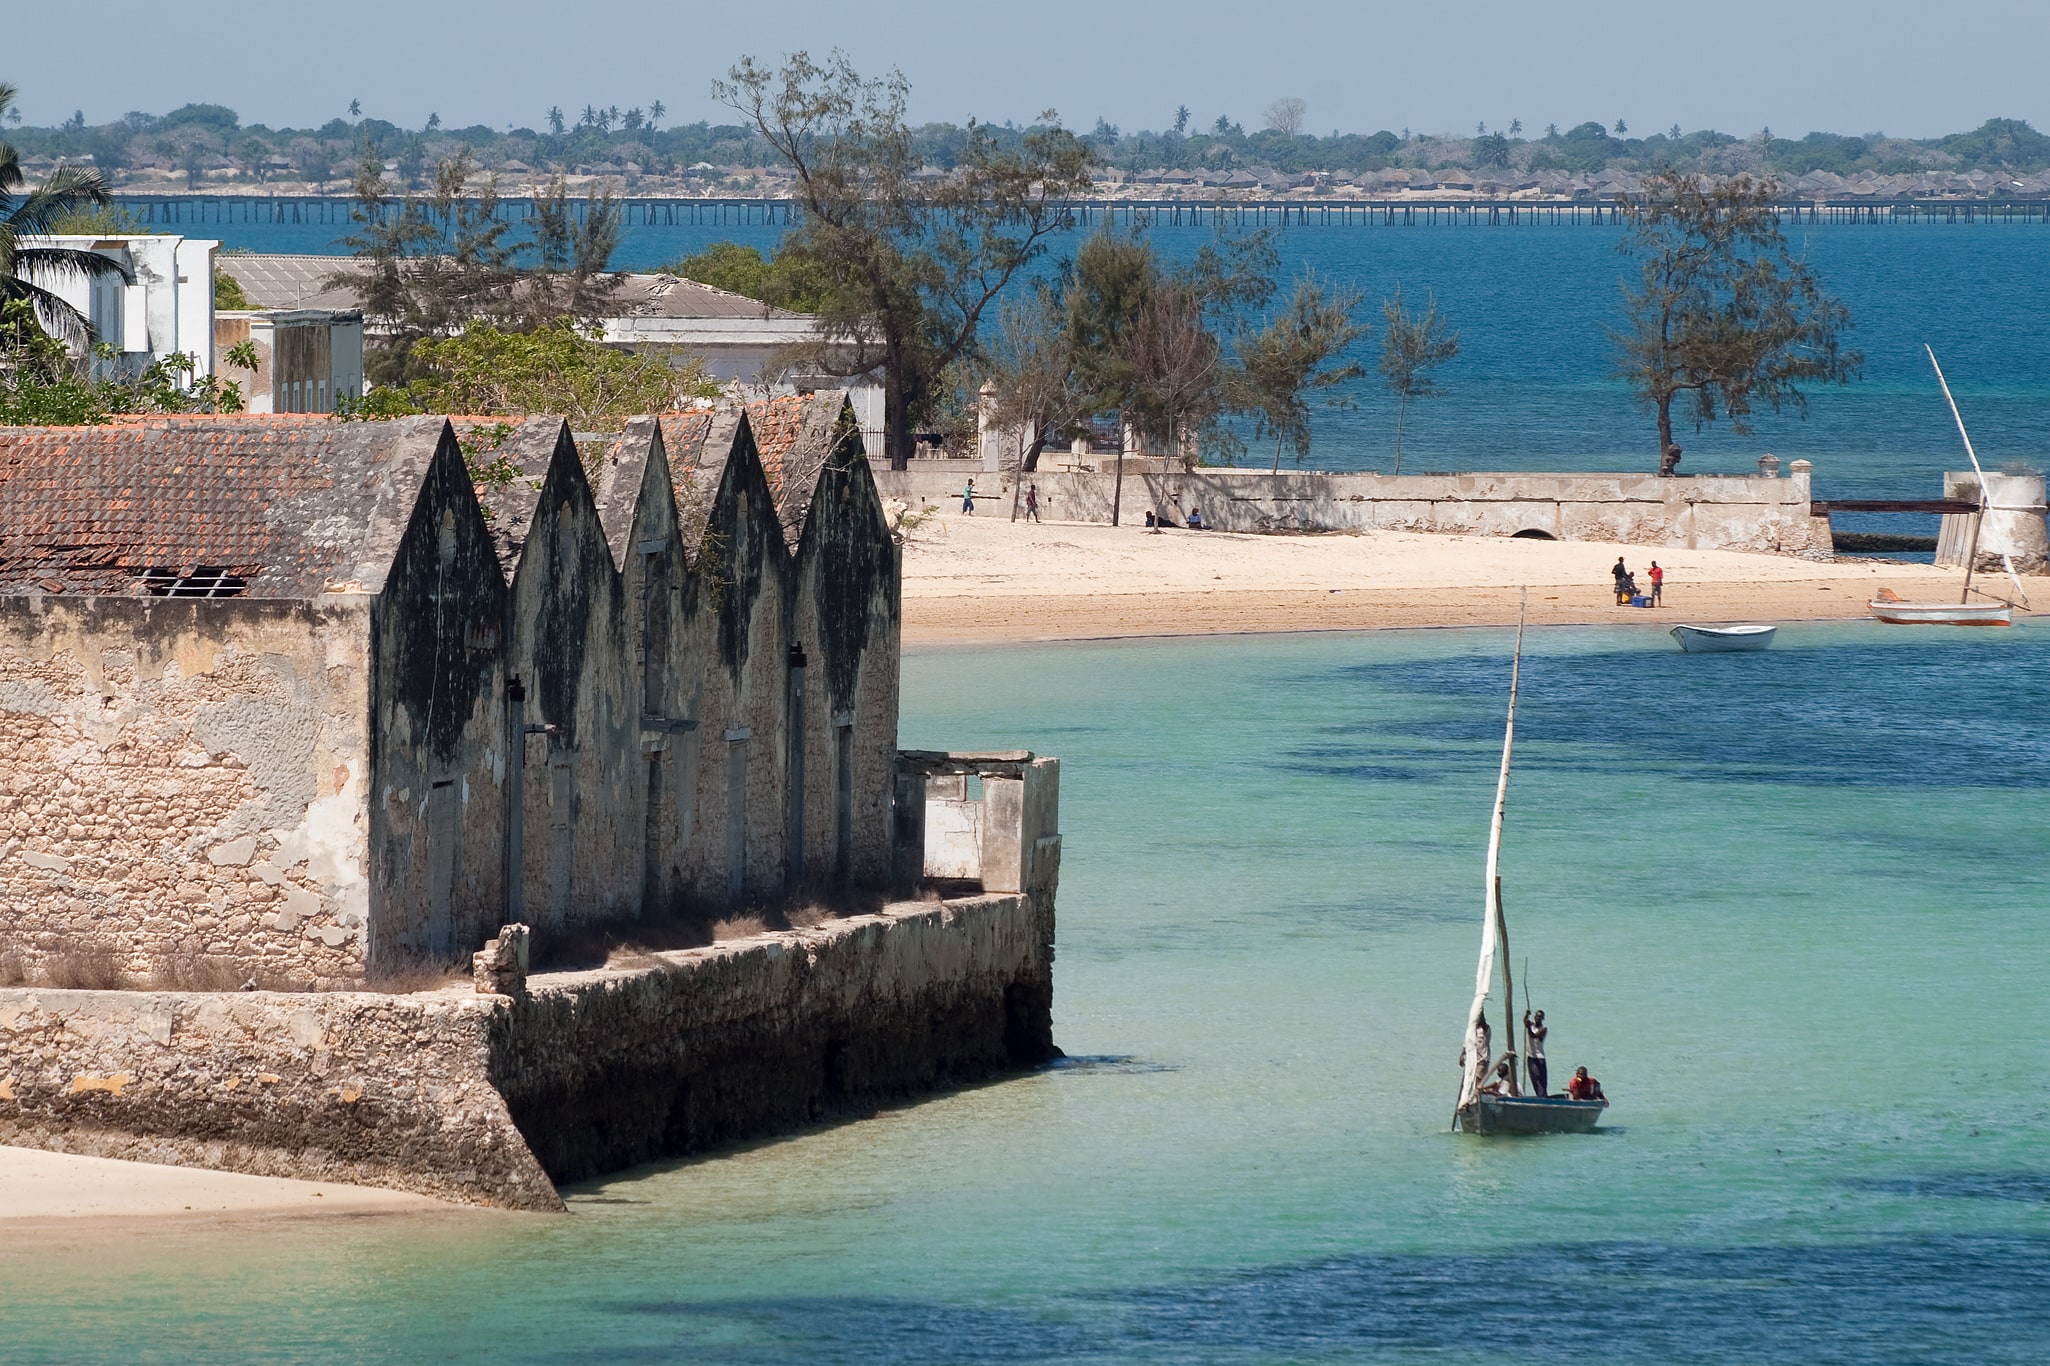 Ilha de Moçambique, Mosambik